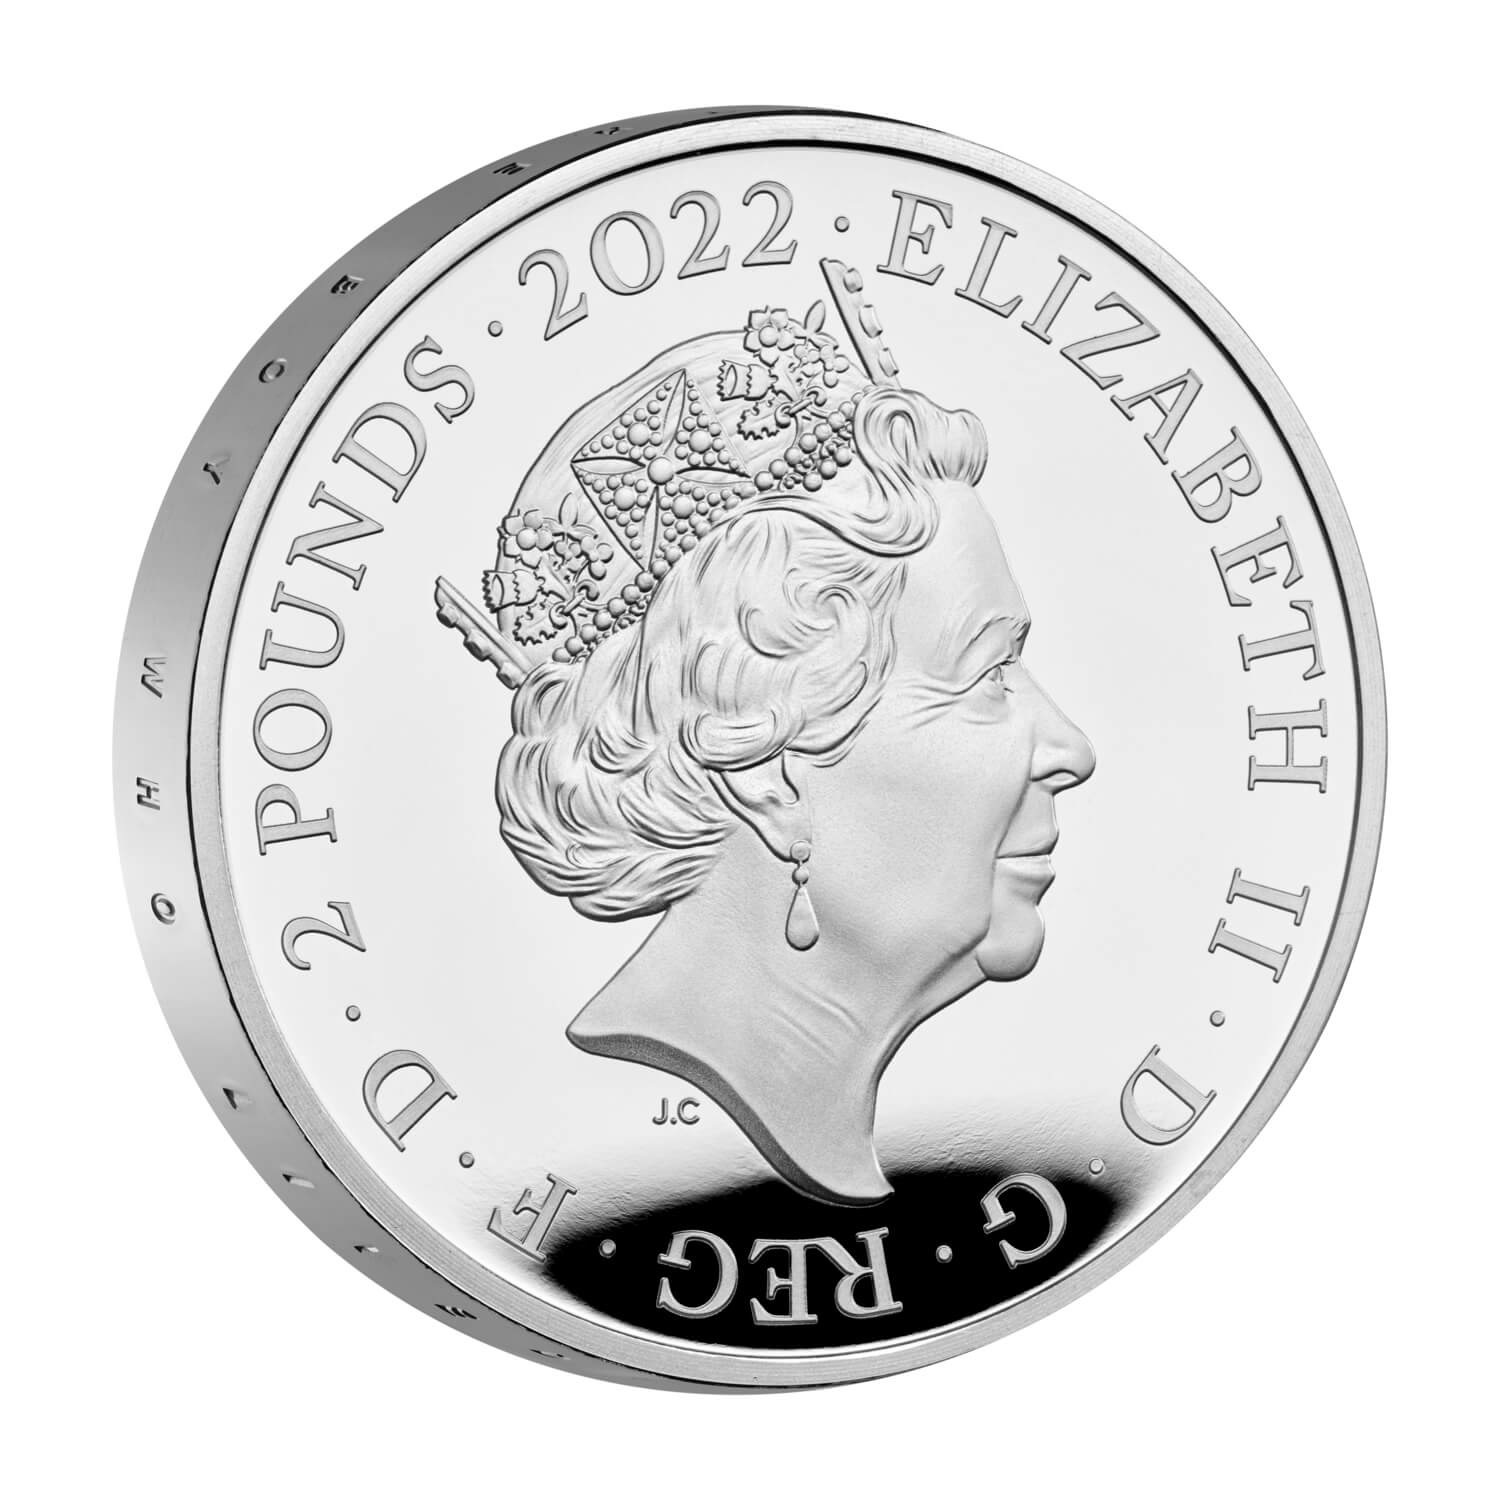 (W185.2.P.2022.UK22HPS1) 2 Pounds United Kingdom 2022 1 ounce Proof silver - Harry Potter Obverse (zoom)